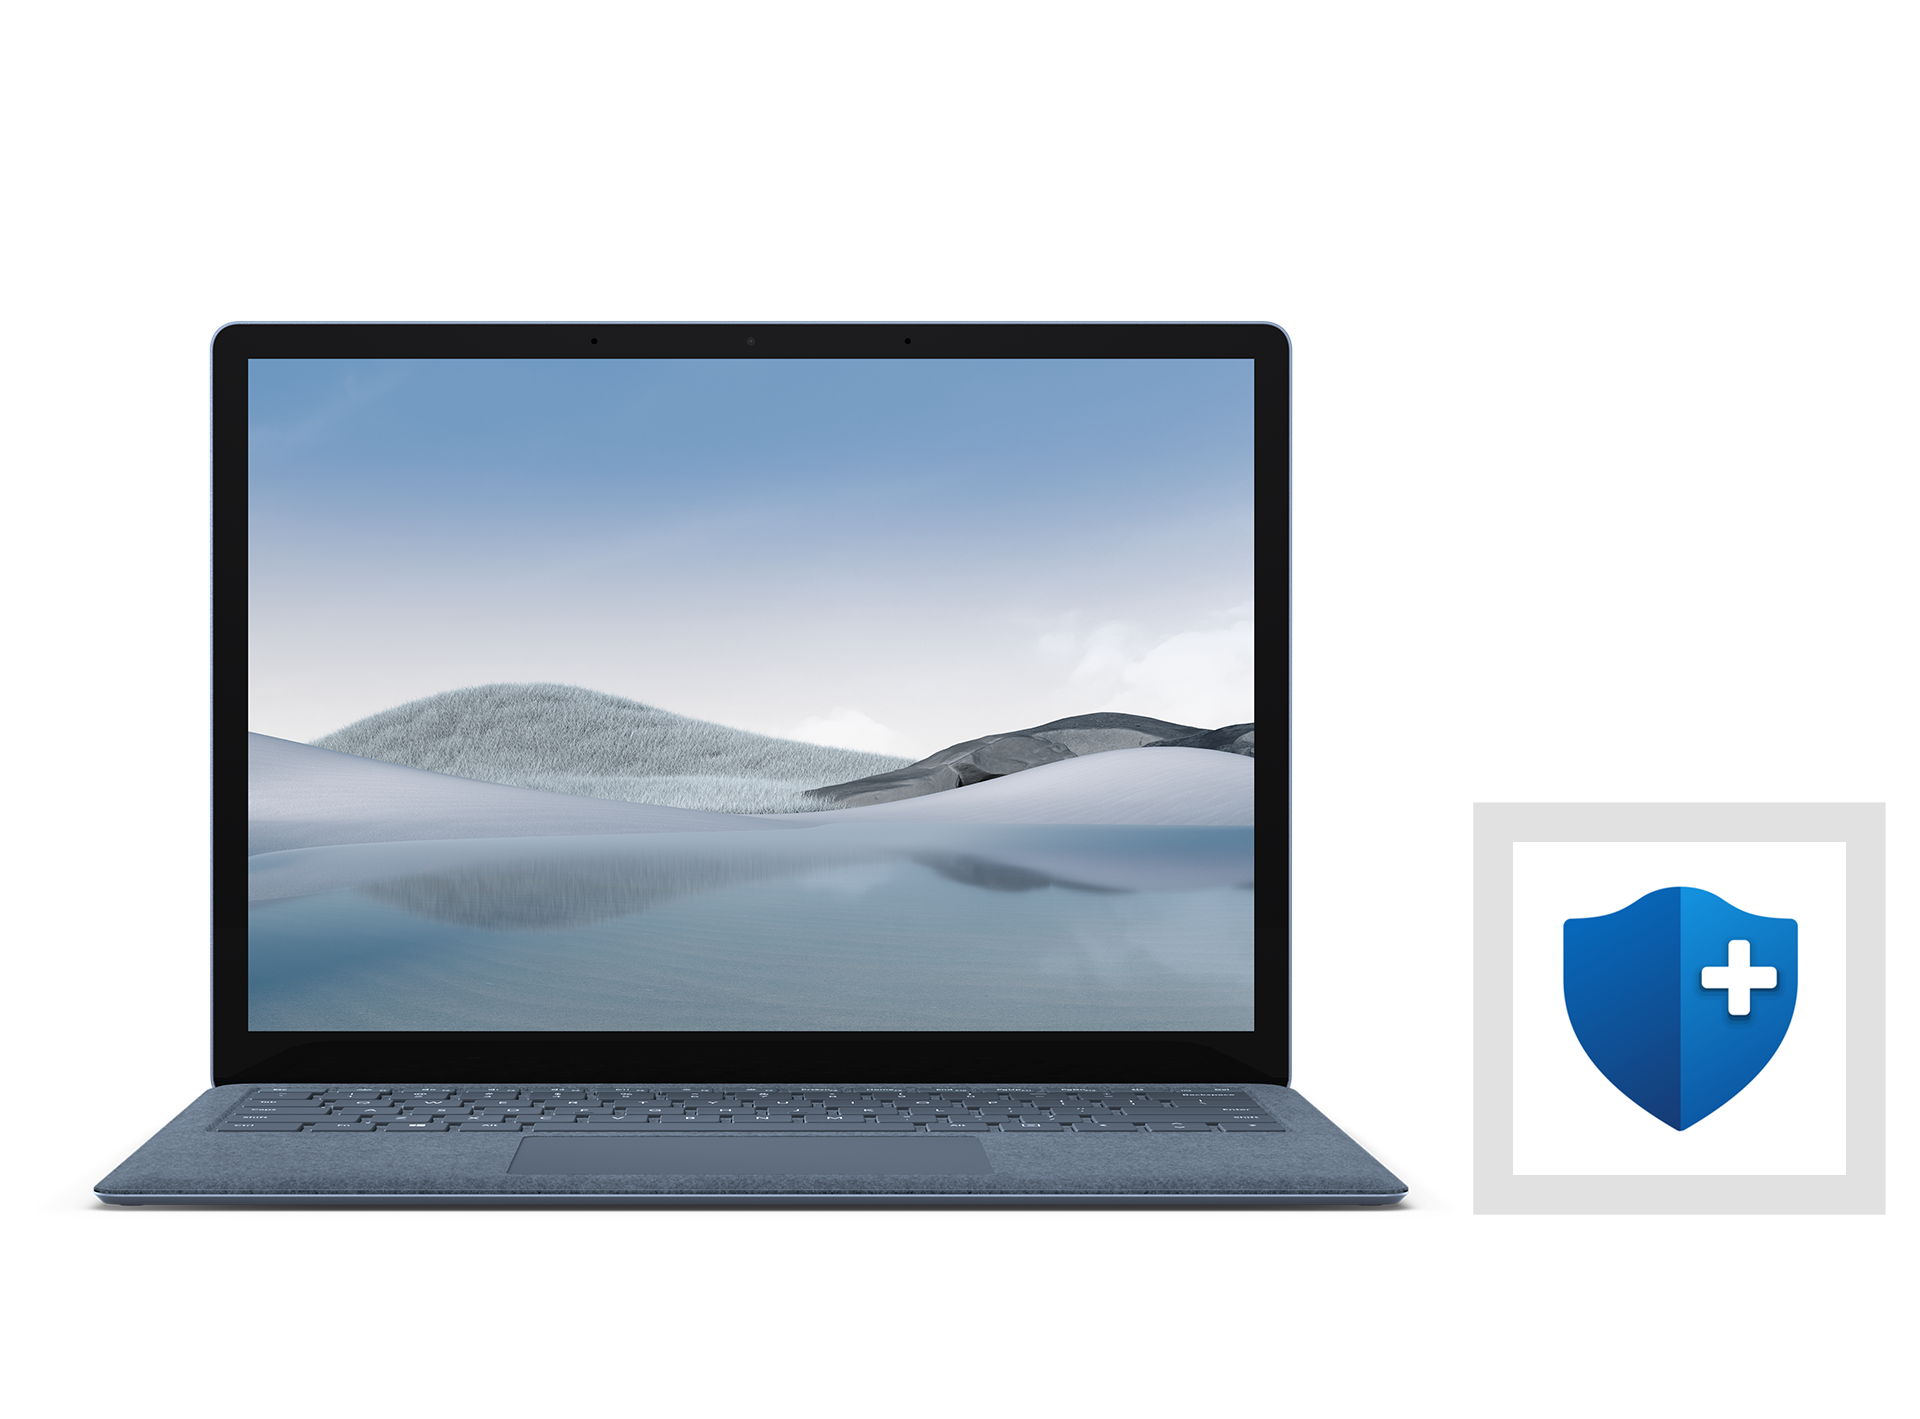 Microsoft Store 限定】Surface Laptop 4 お得なまとめ買い を購入 - Microsoft Store ja-JP